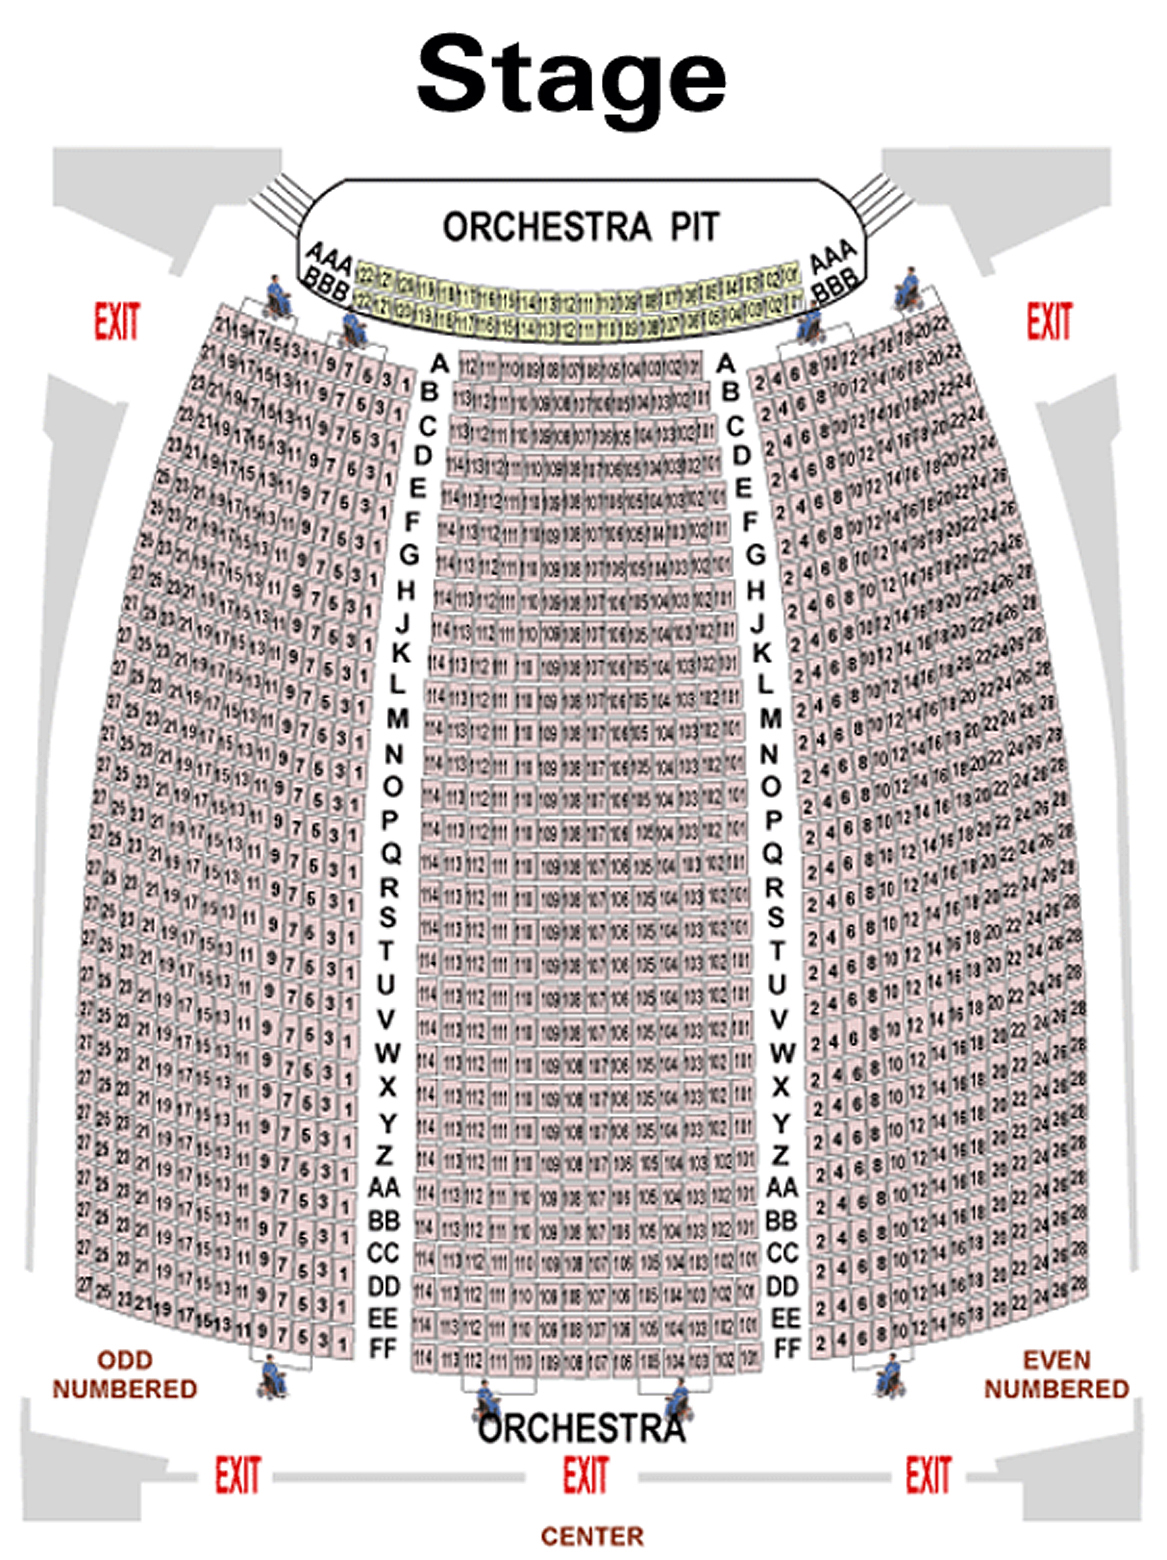 War Memorial Concert Seating Chart